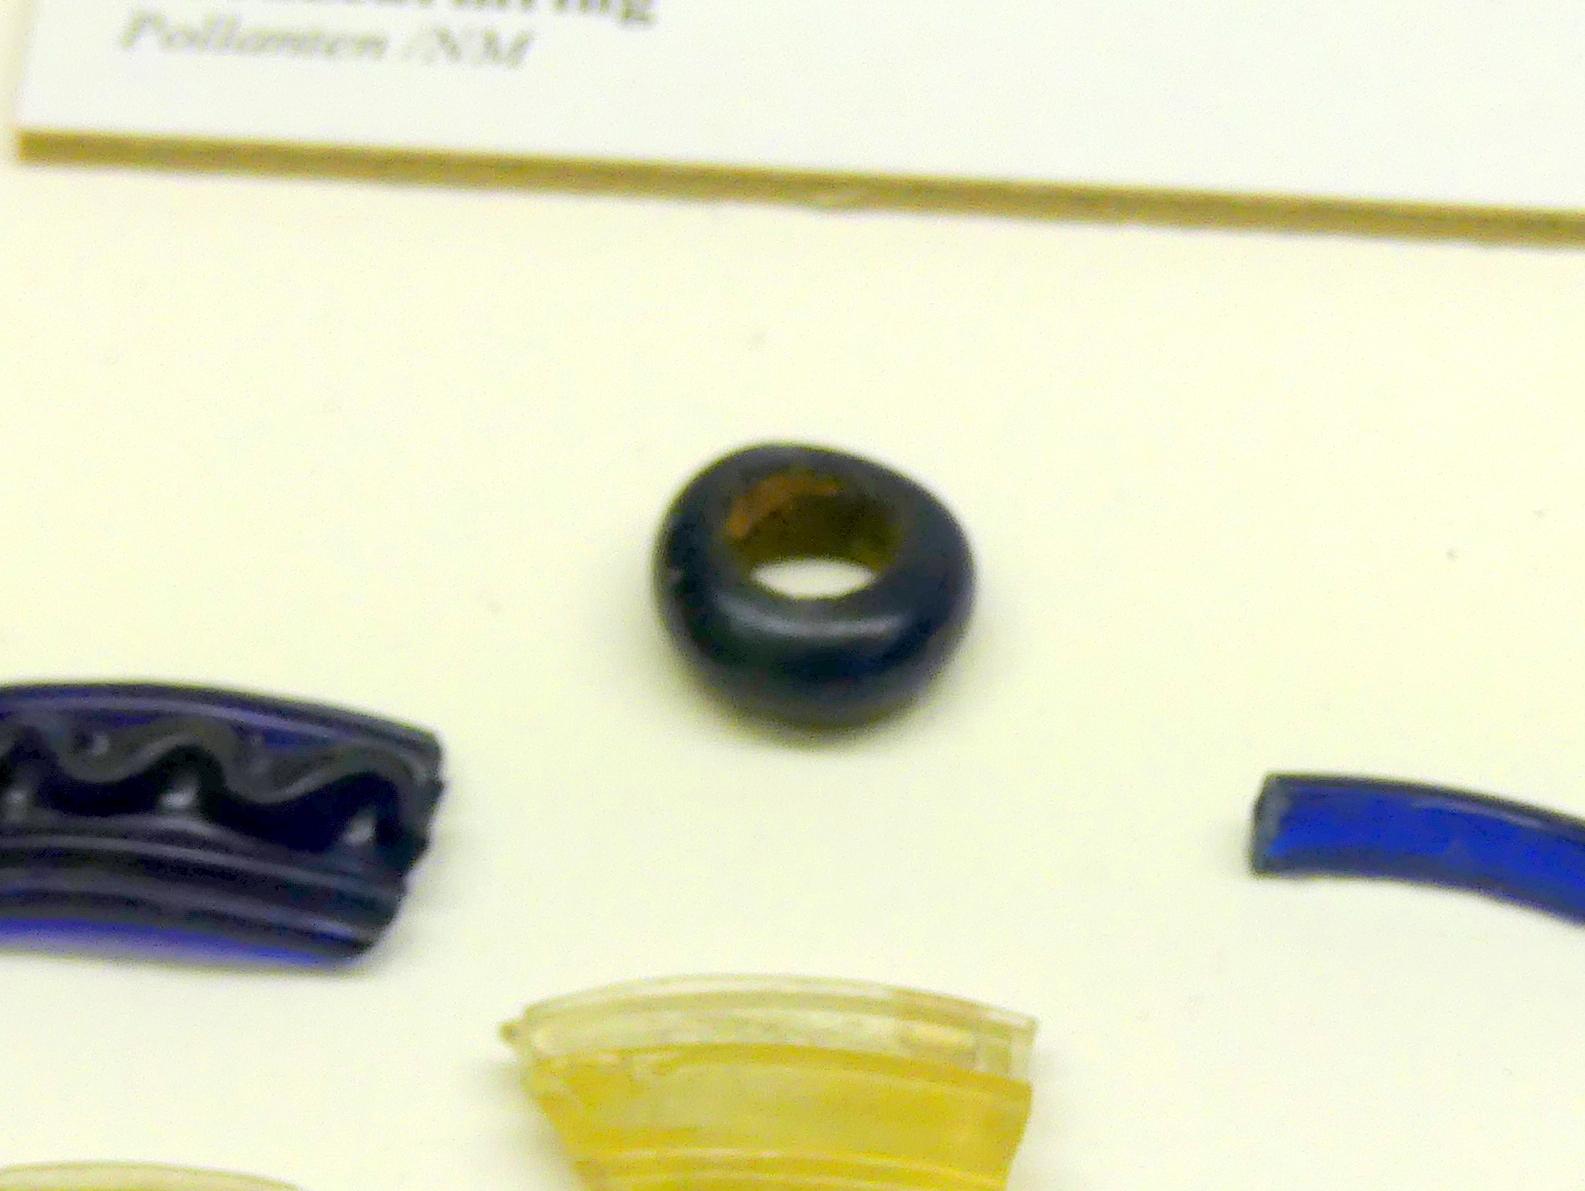 Blaue Ringperle, Spätlatènezeit D, 700 - 100 v. Chr., Bild 1/2